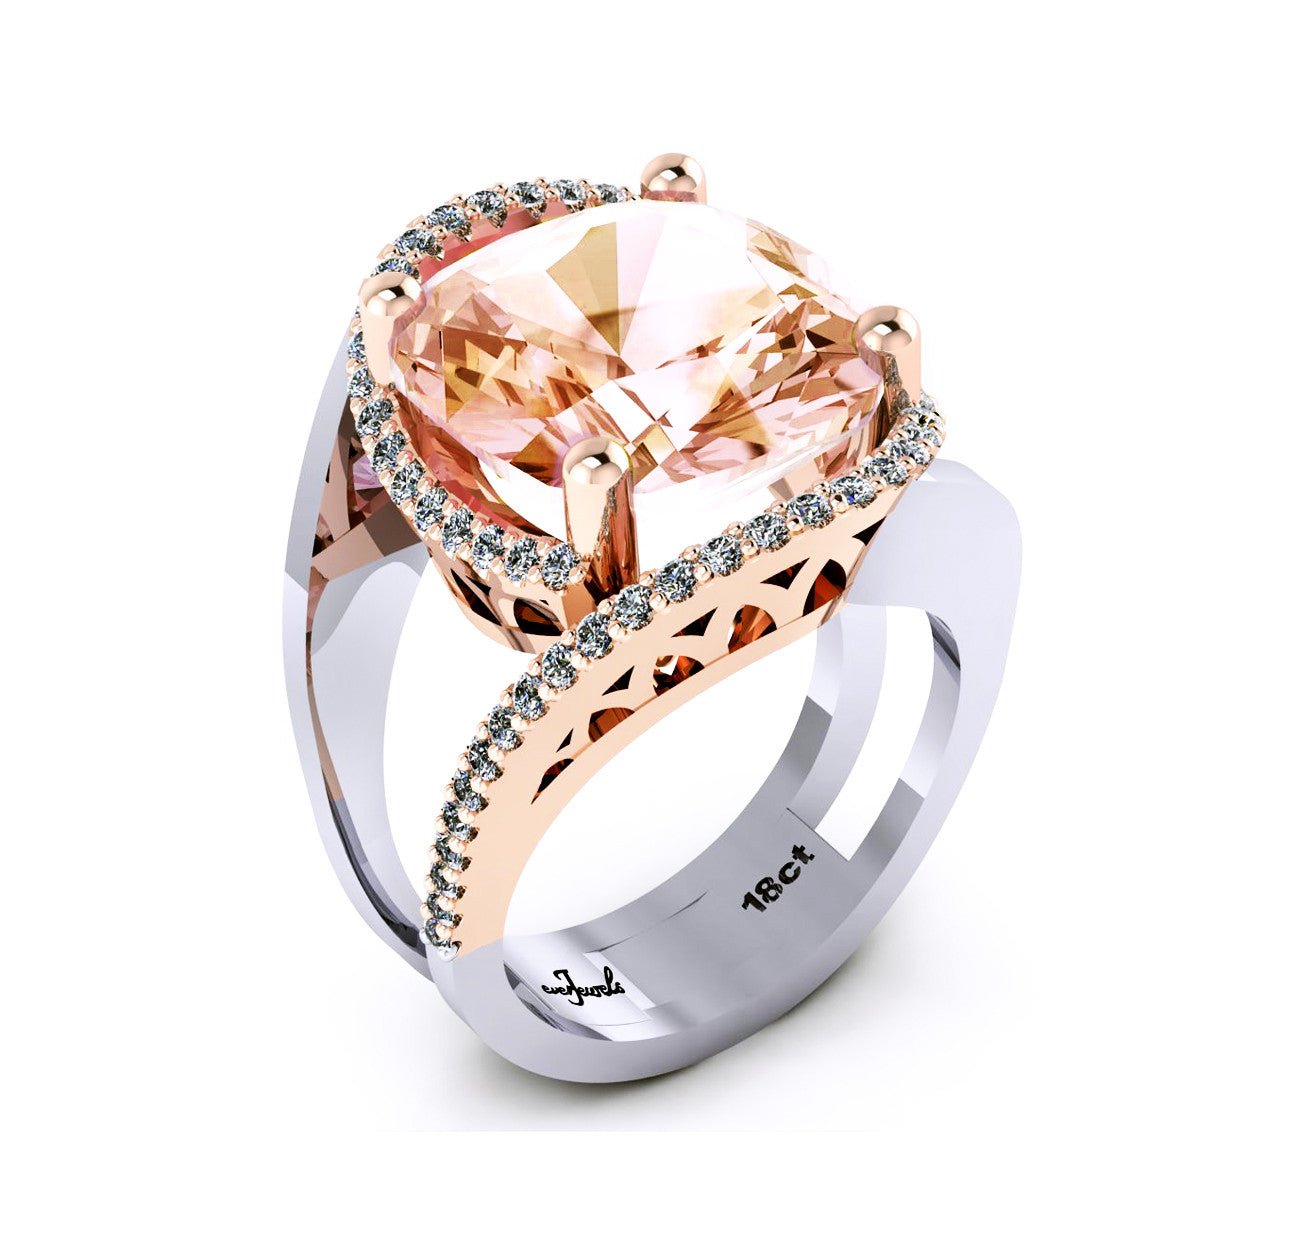 18ct White and rose gold cushion cut morganite dress ring - ForeverJewels Design Studio 8